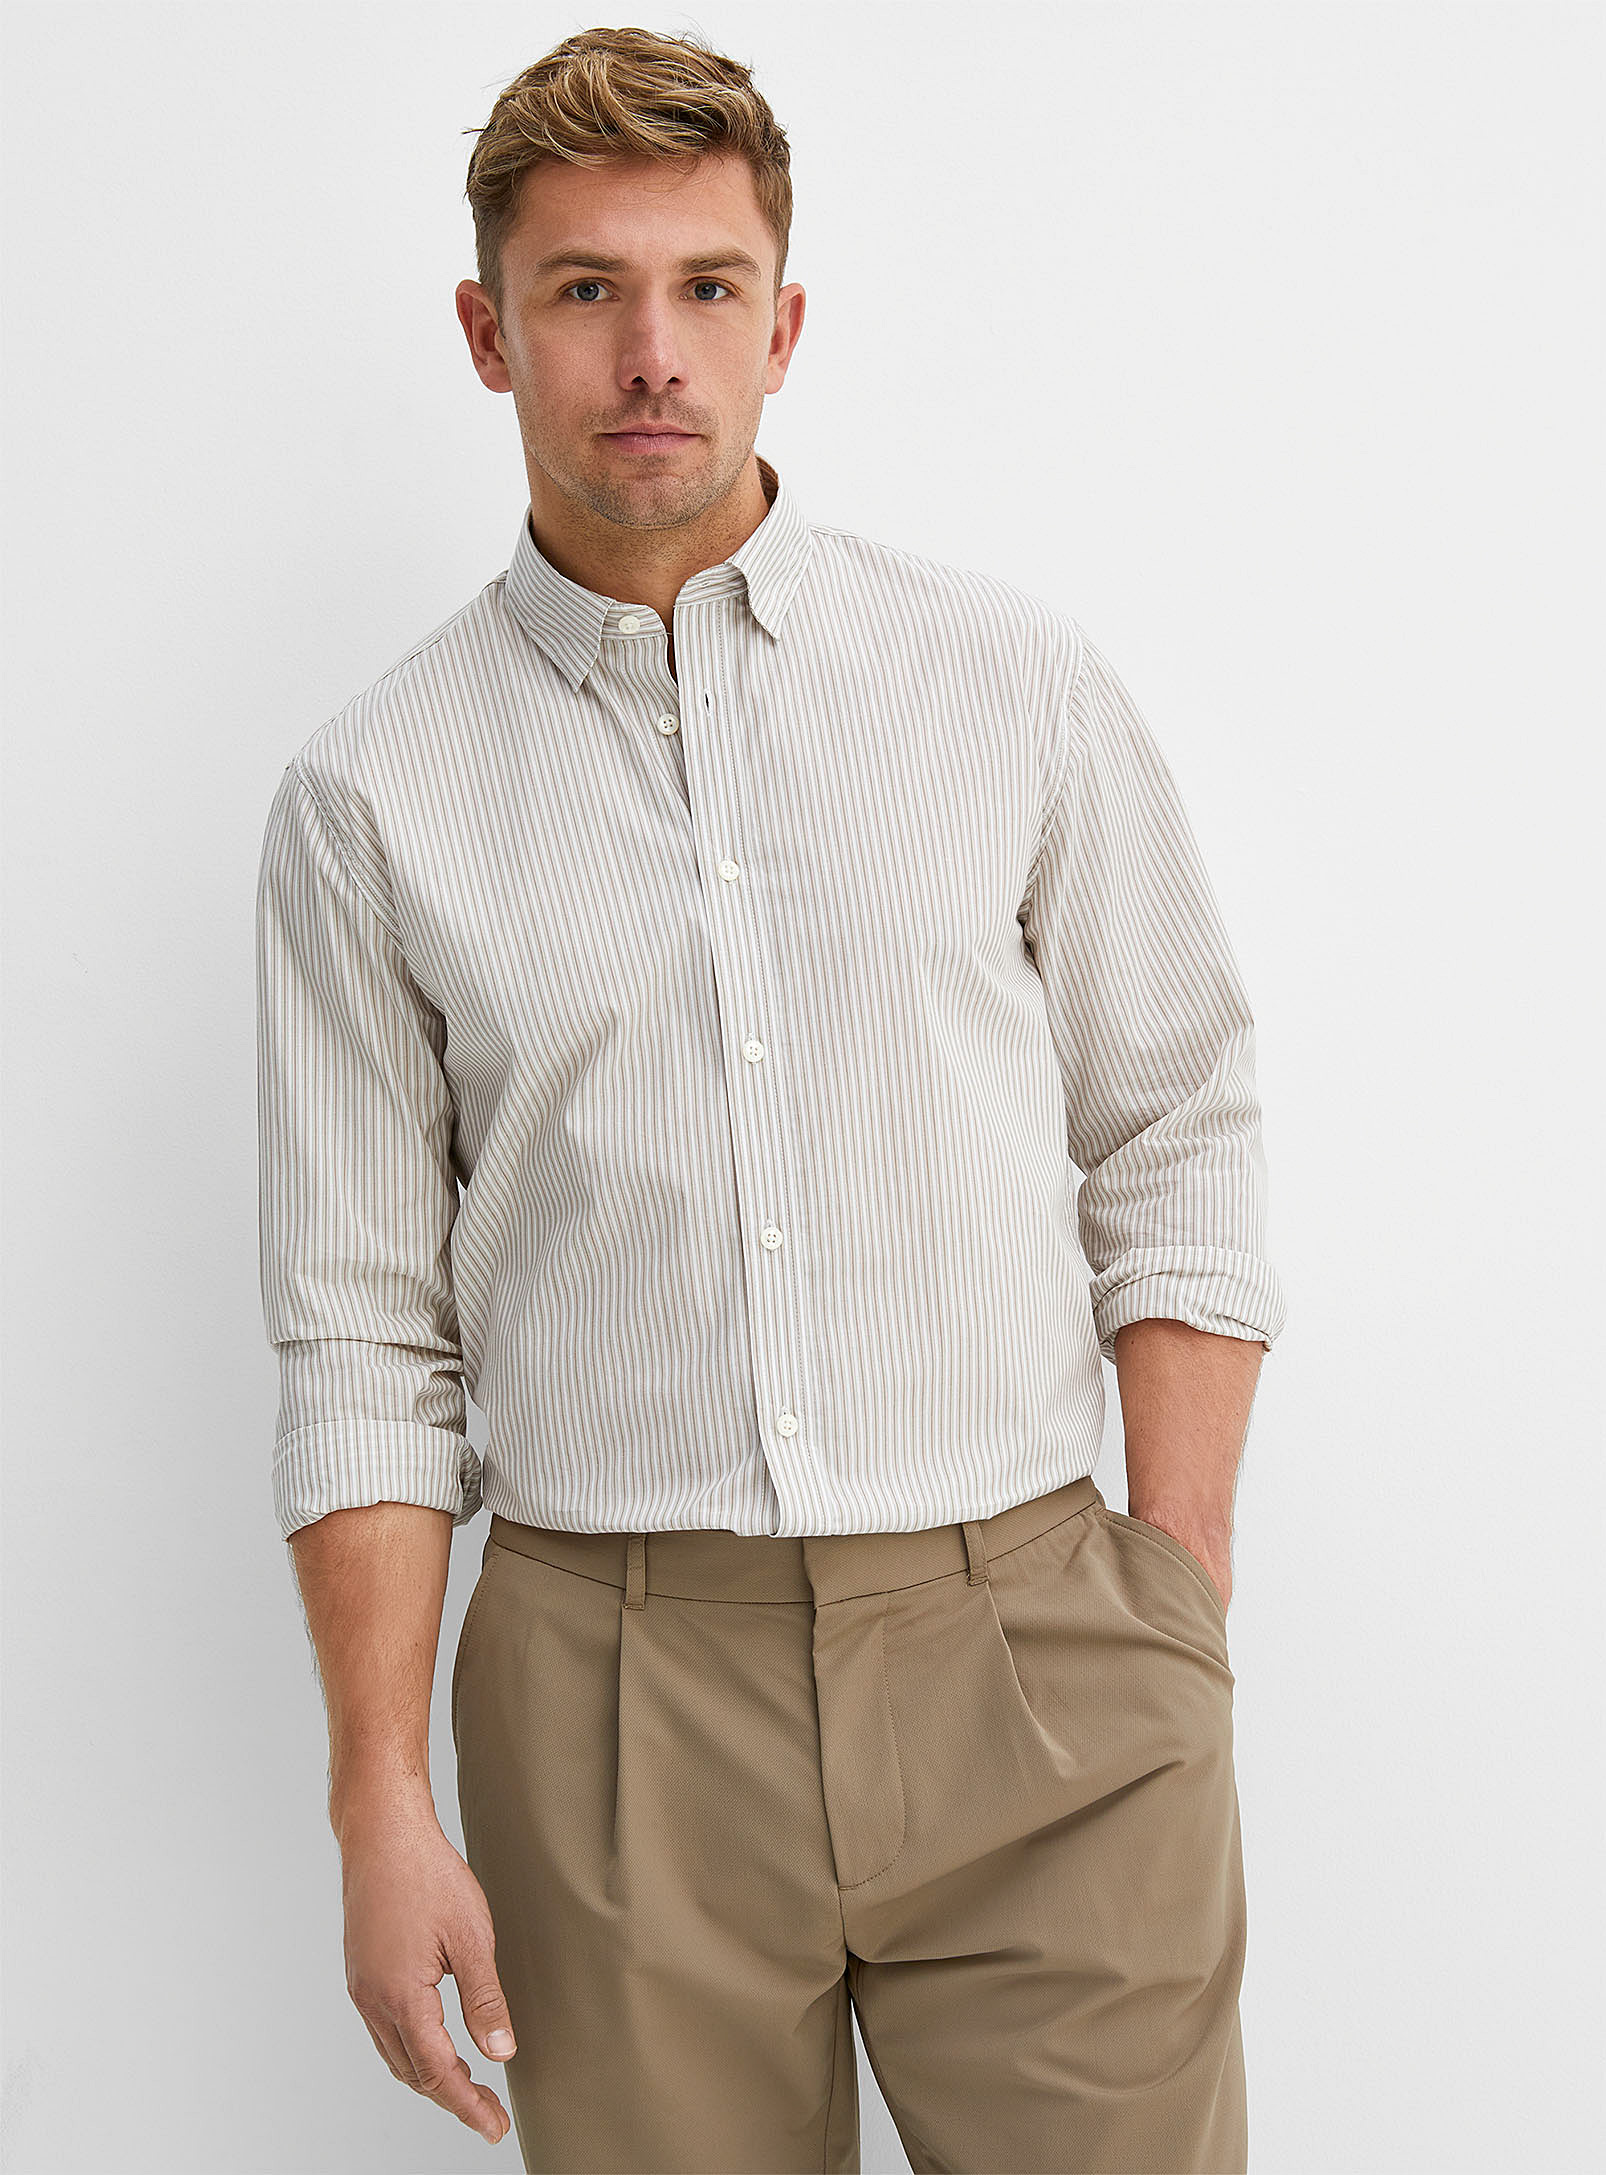 Matinique - Men's Natural stripe shirt